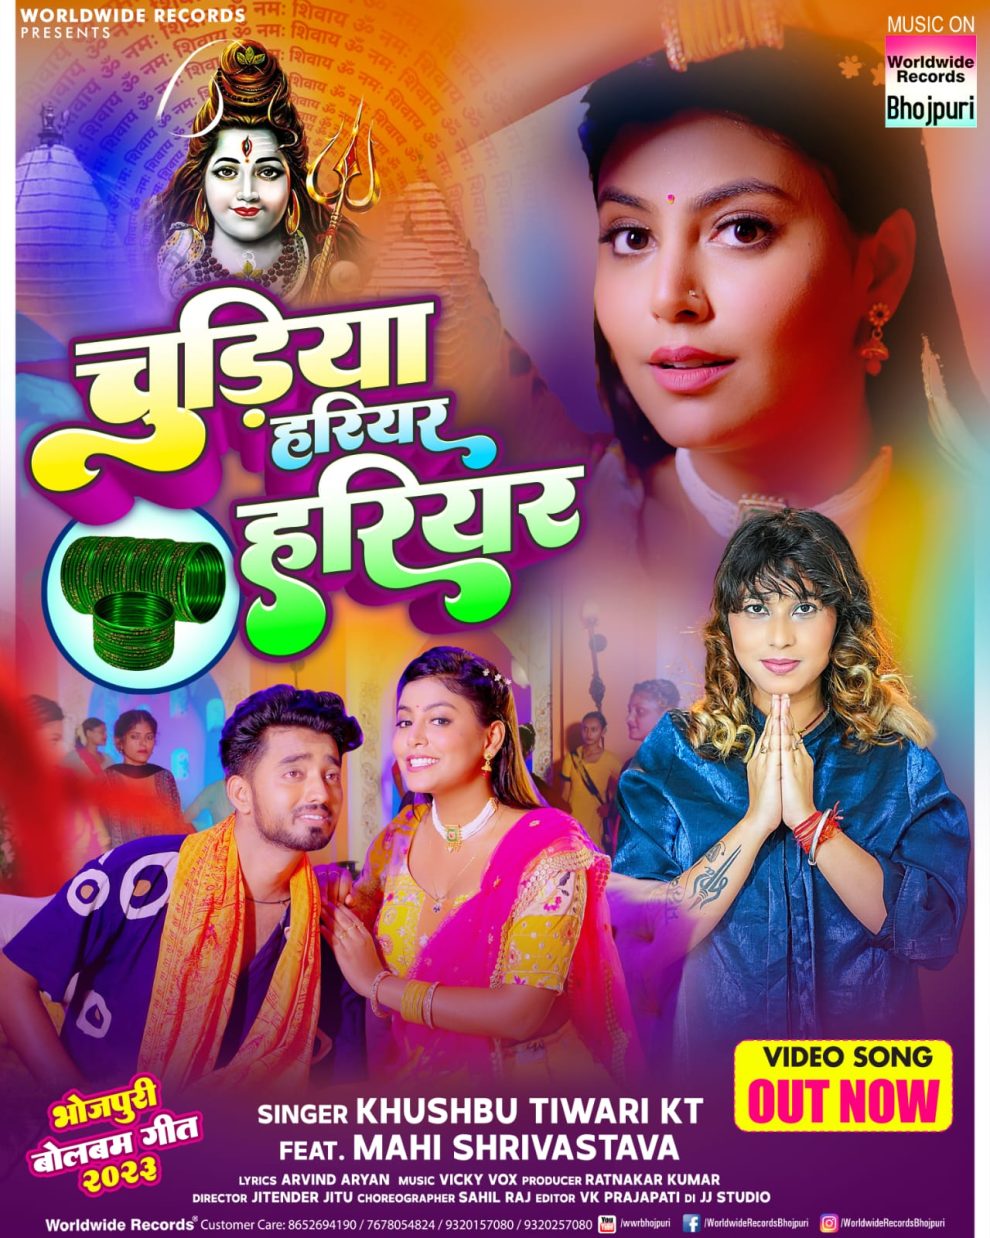 Khushboo Tiwari KT and Mahi Srivastava's Bhojpuri Bolbam song 'Chudiya Hariyar Hariyar' released